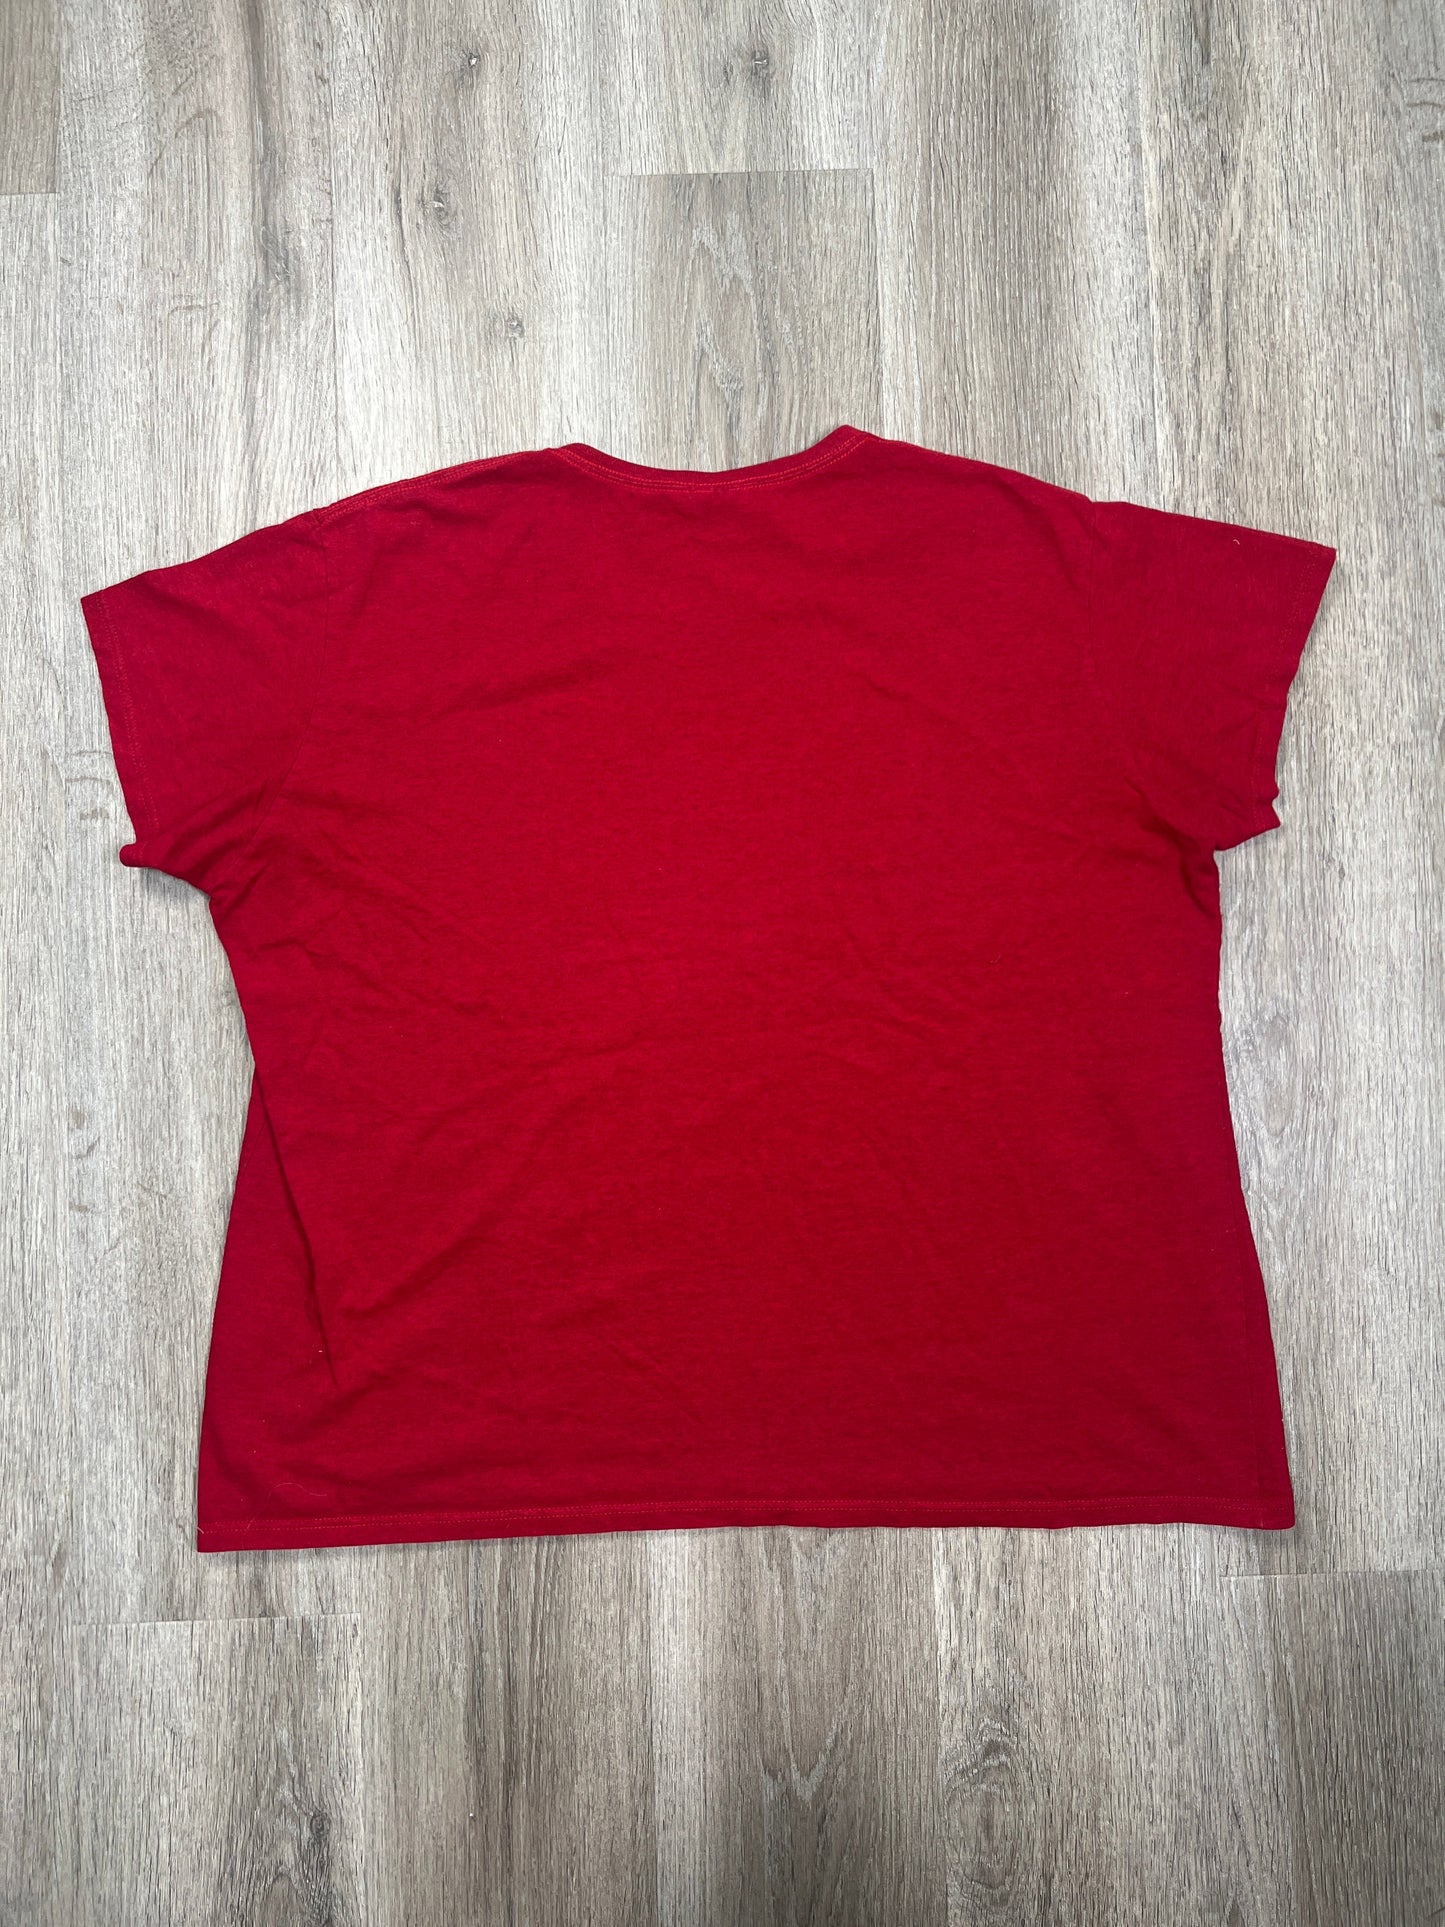 Red Top Short Sleeve Gildan, Size 3x